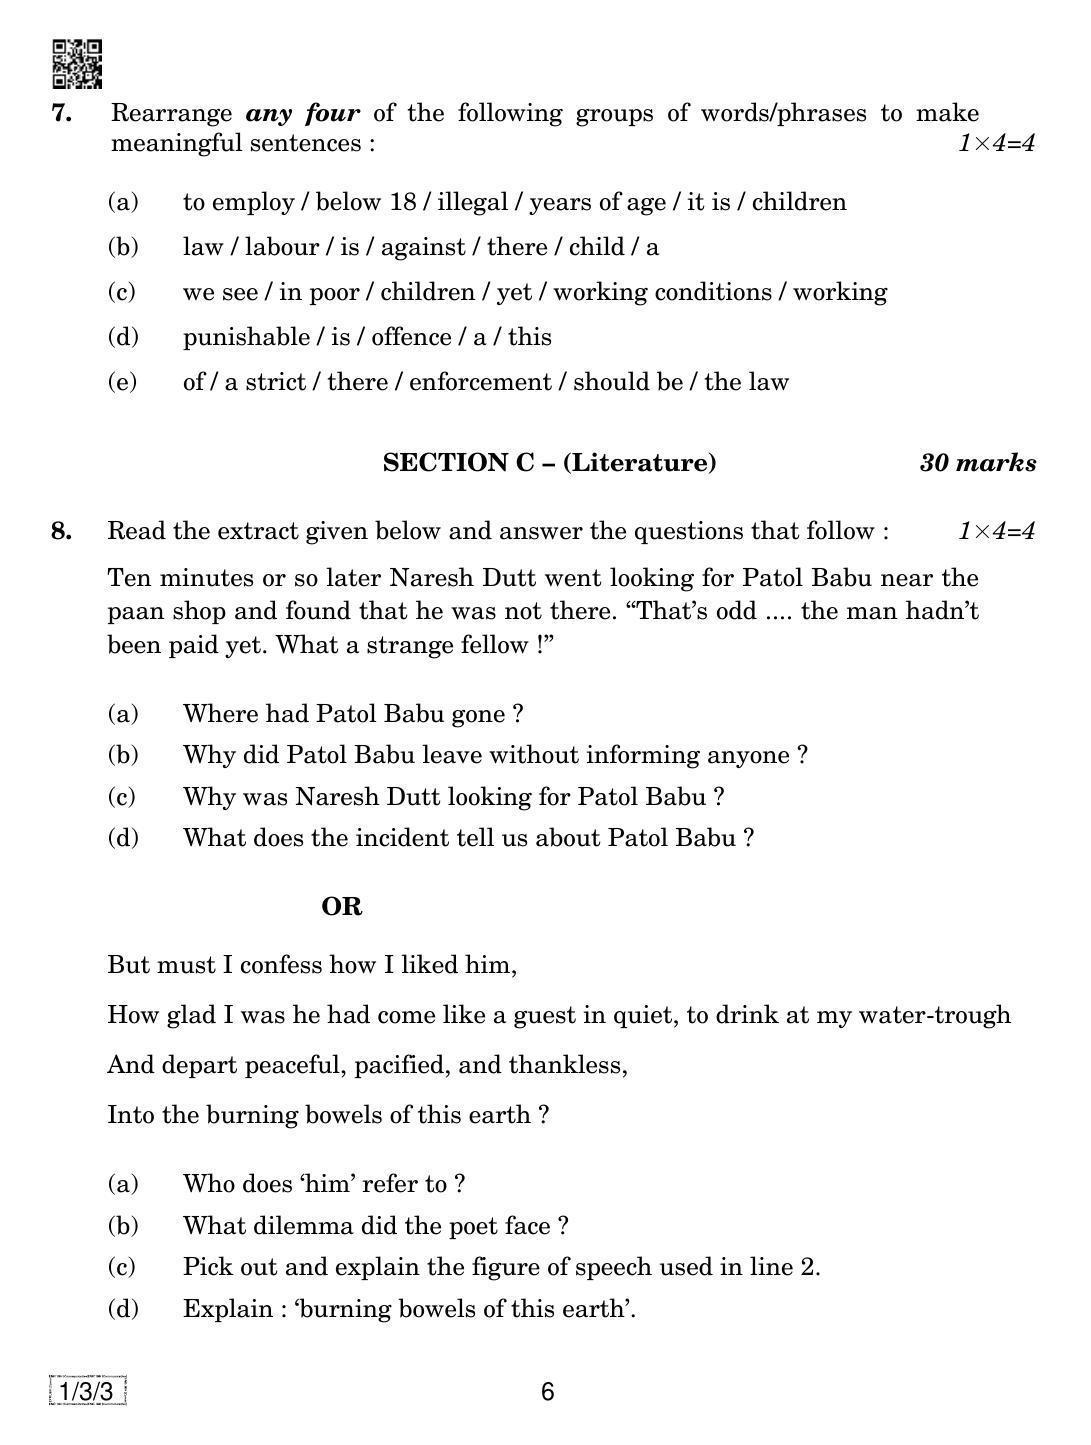 CBSE Class 10 1-3-3 ENGLISH COMMUNICATIVE 2019 Question Paper - Page 6